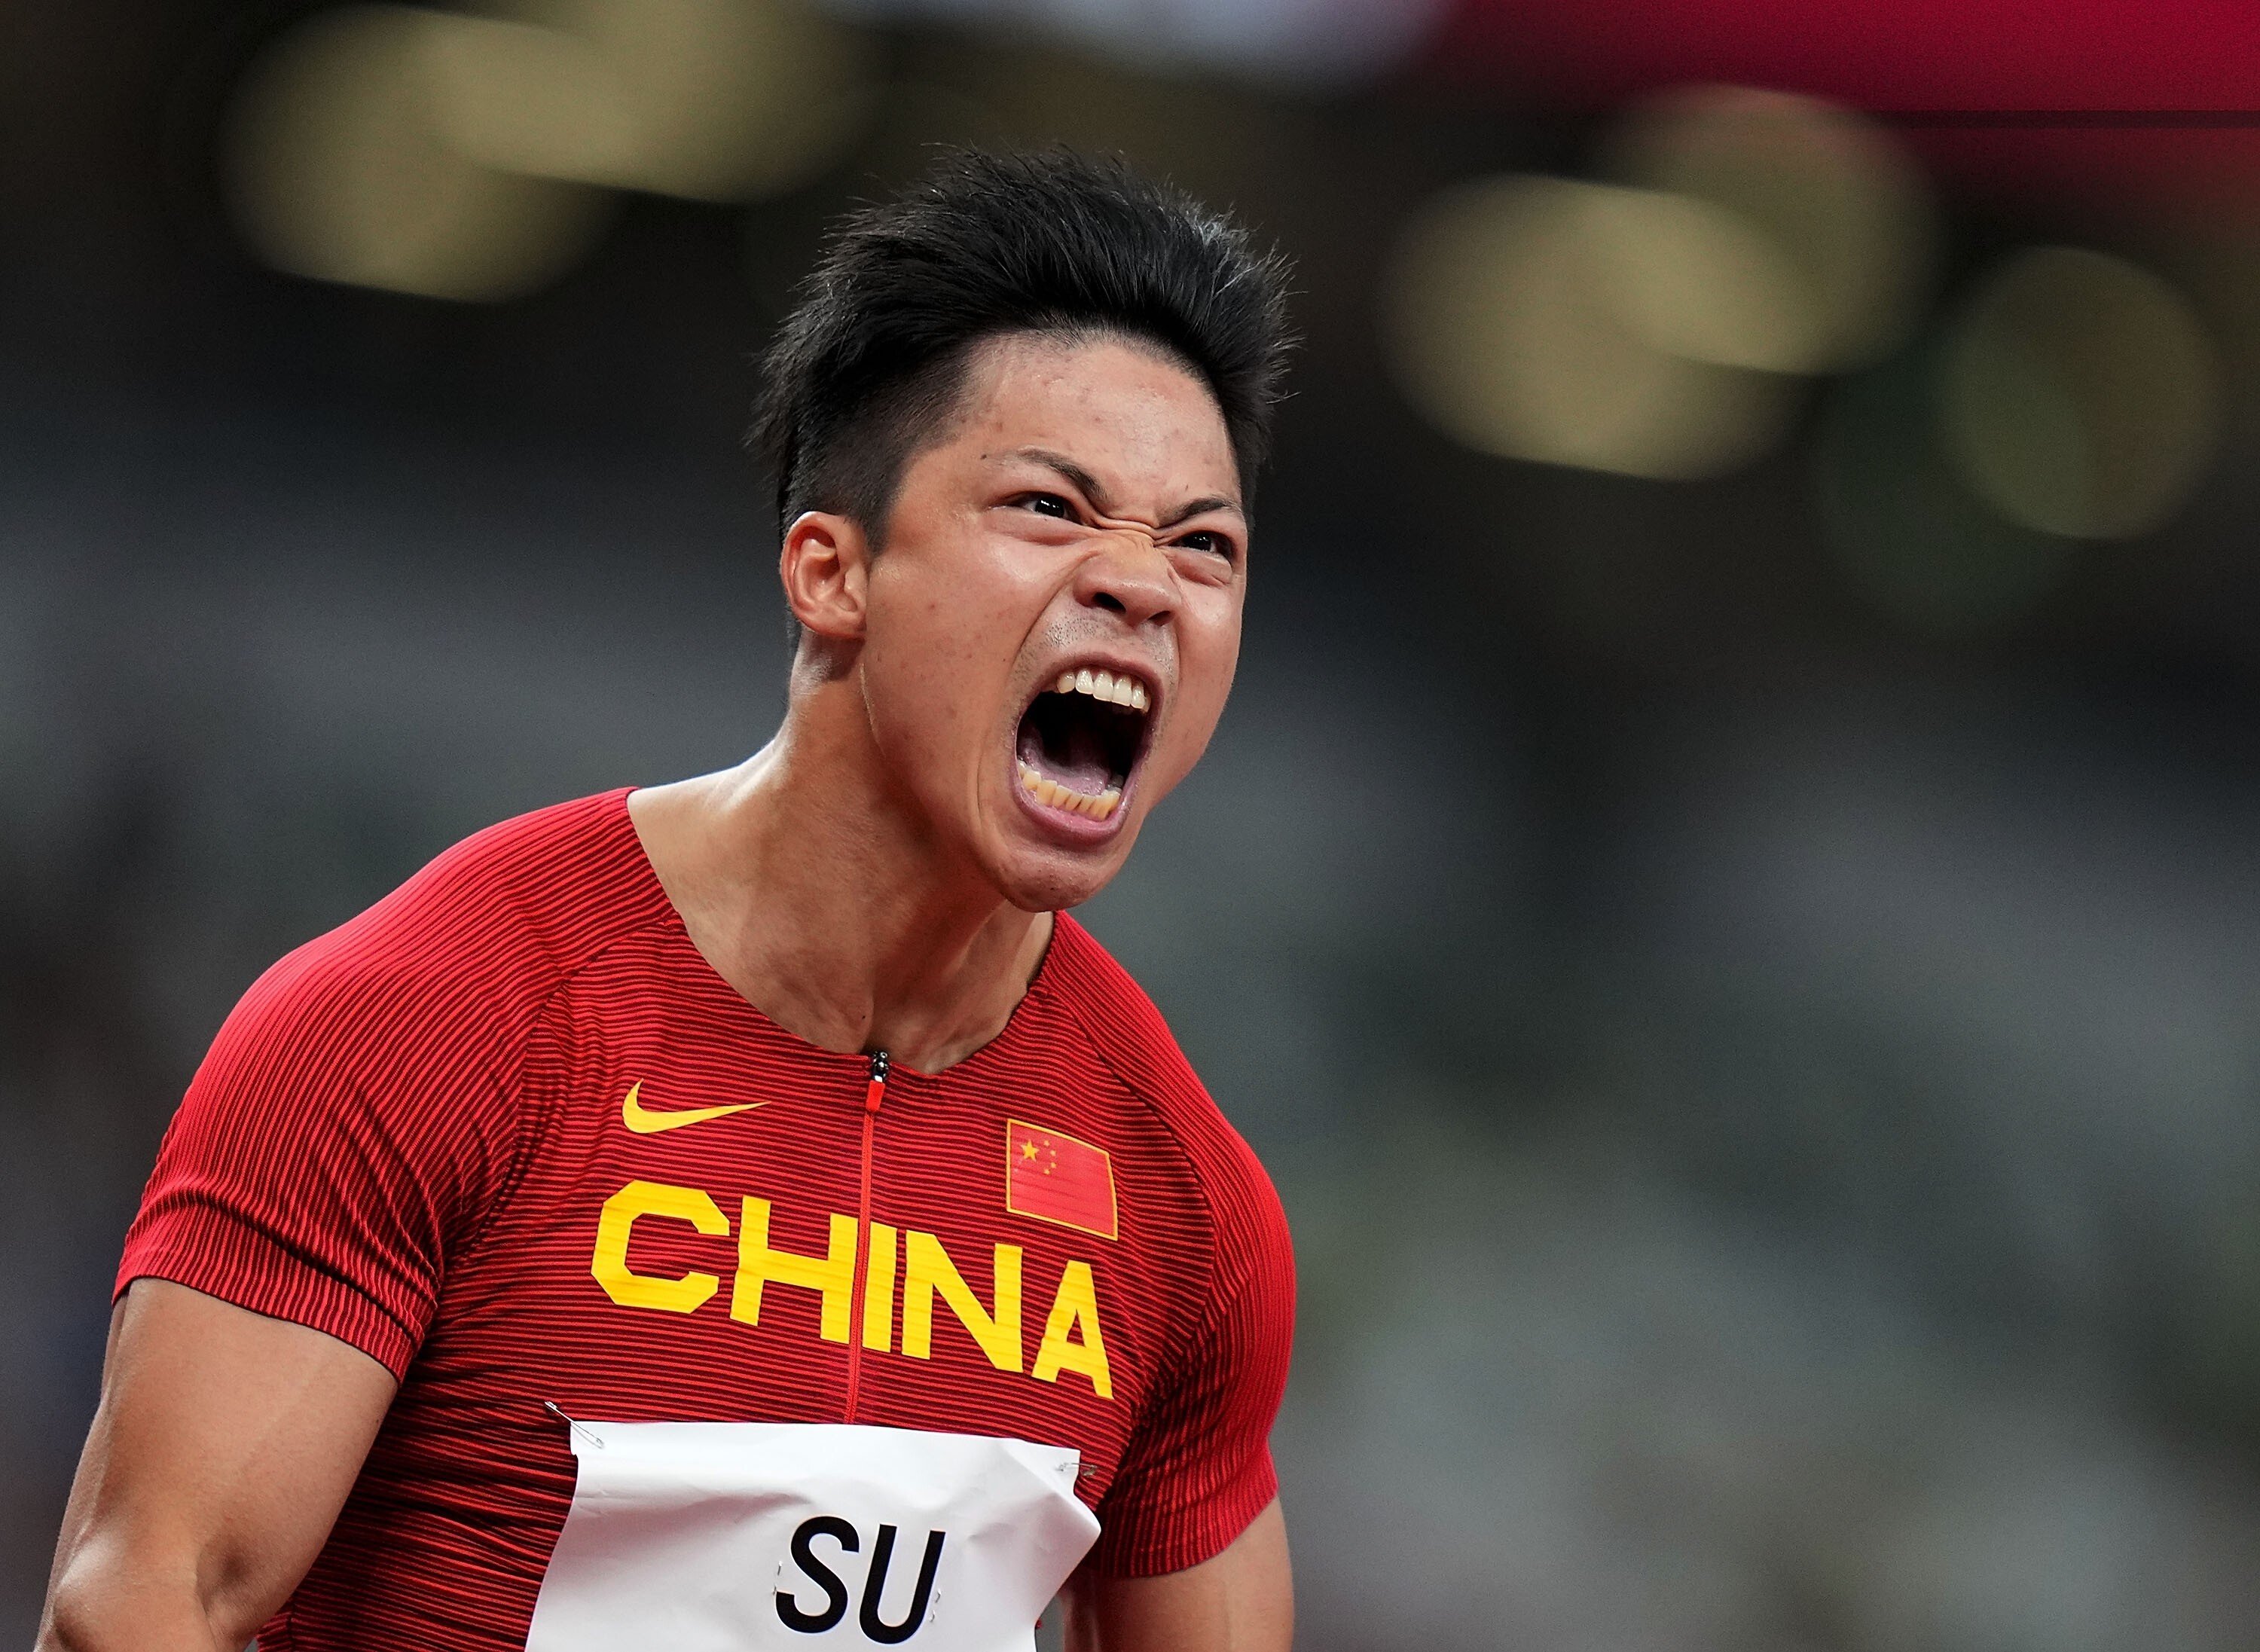 China’s Su Bingtian of China reacts after the men's 100m semi-final at the Tokyo 2020 Olympic Games. Photo: Xinhua